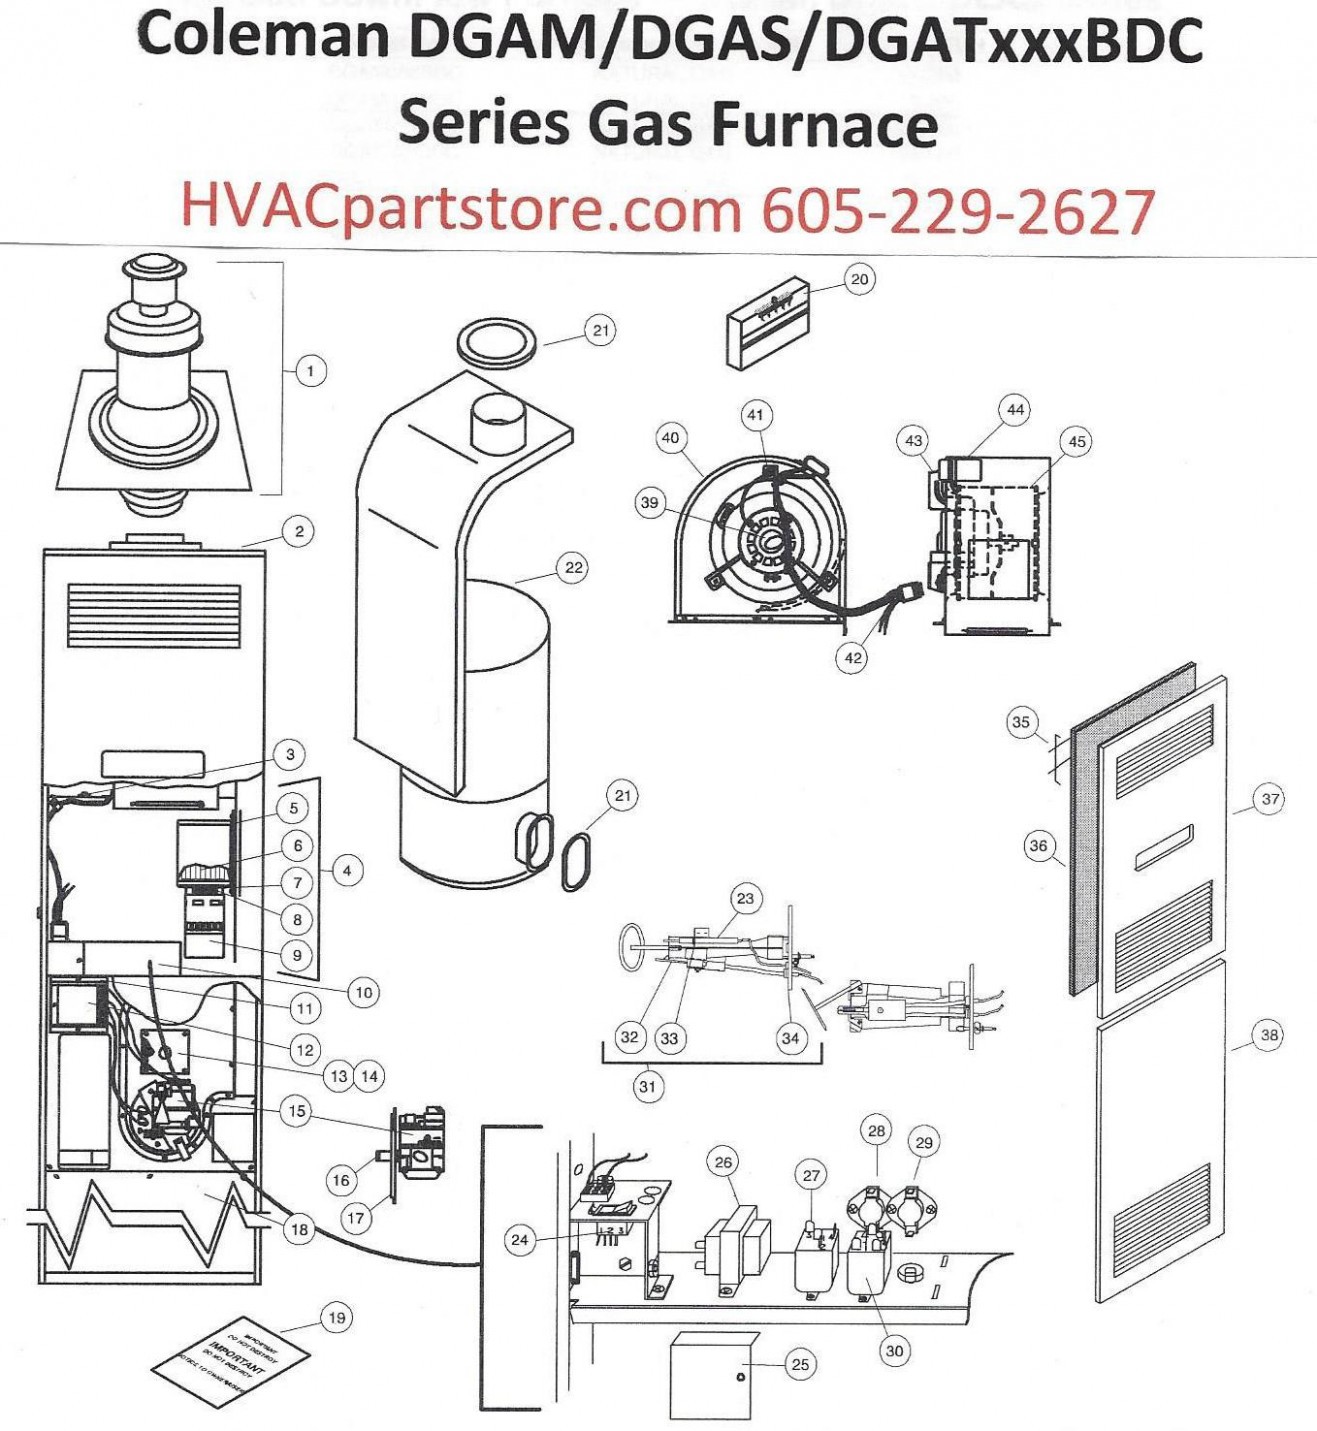 DGAT23BDD Coleman Gas Furnace Parts – HVACpartstore